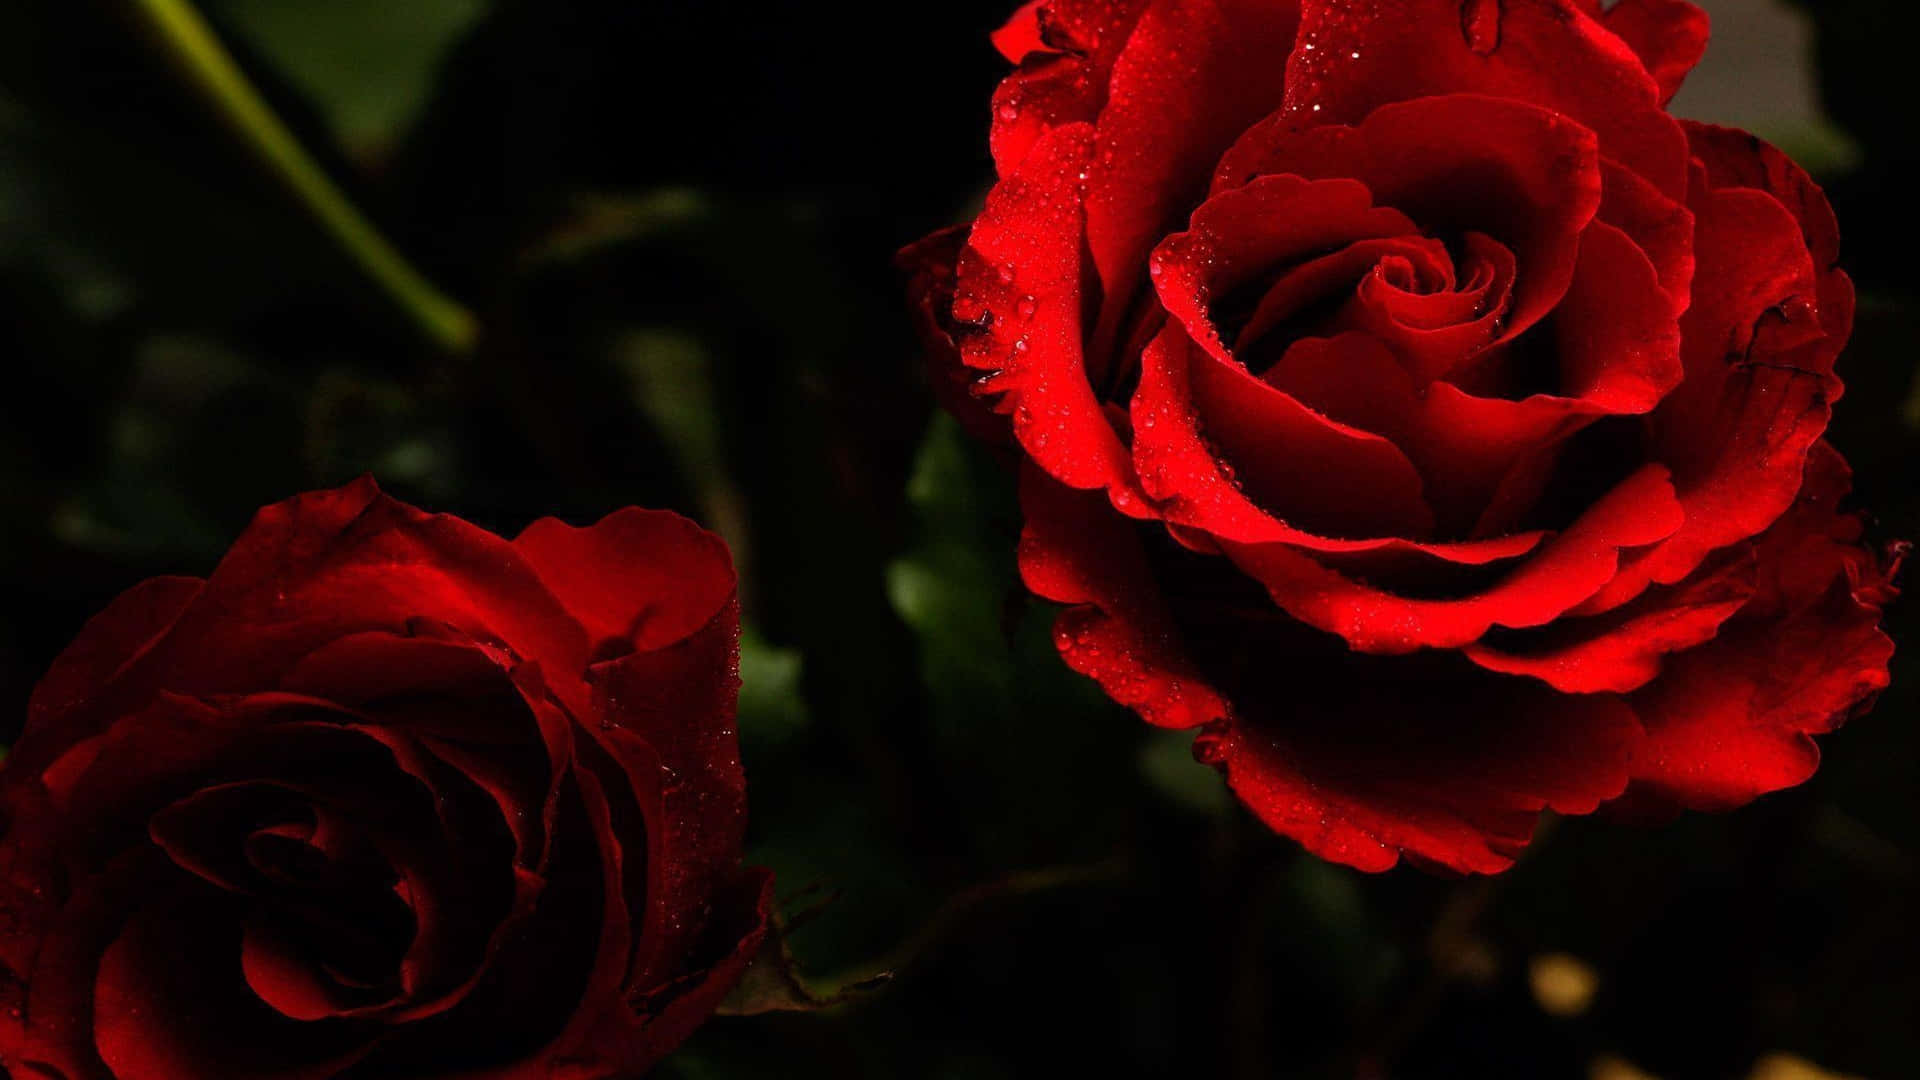 Dark Aesthetic 1080p Beautiful Red Roses Background